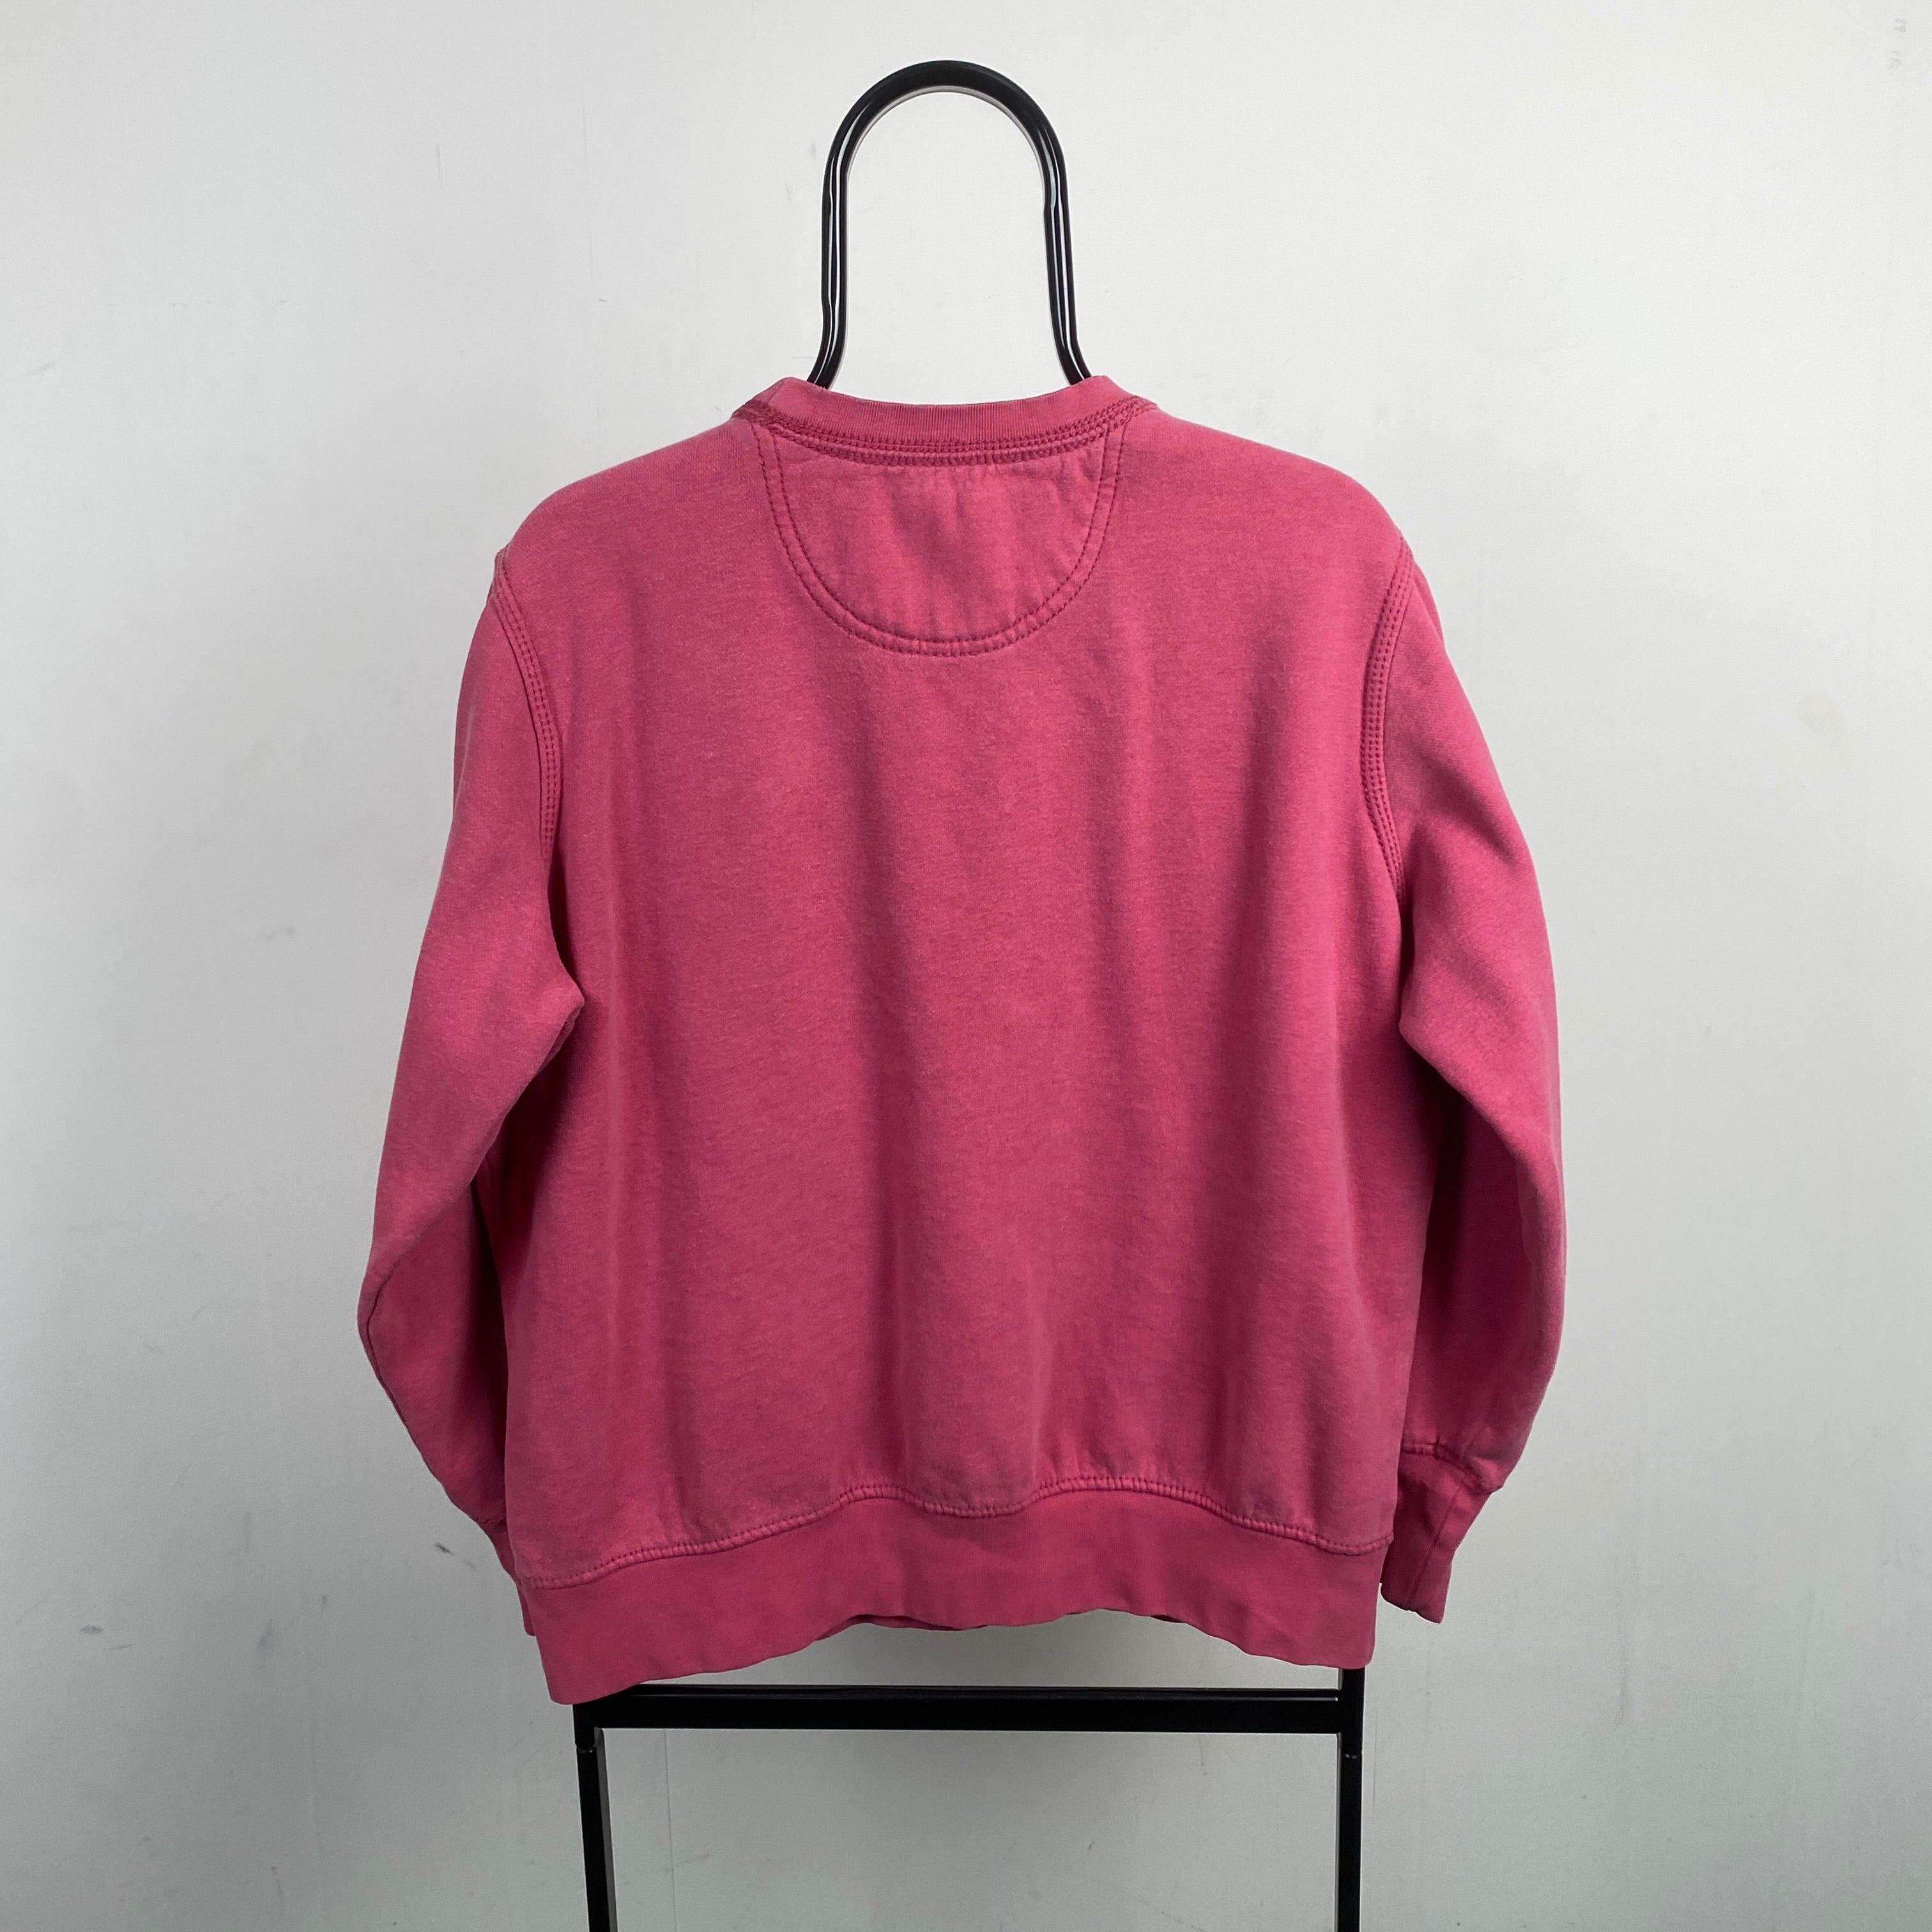 Retro Carhartt Sweatshirt Pink Large